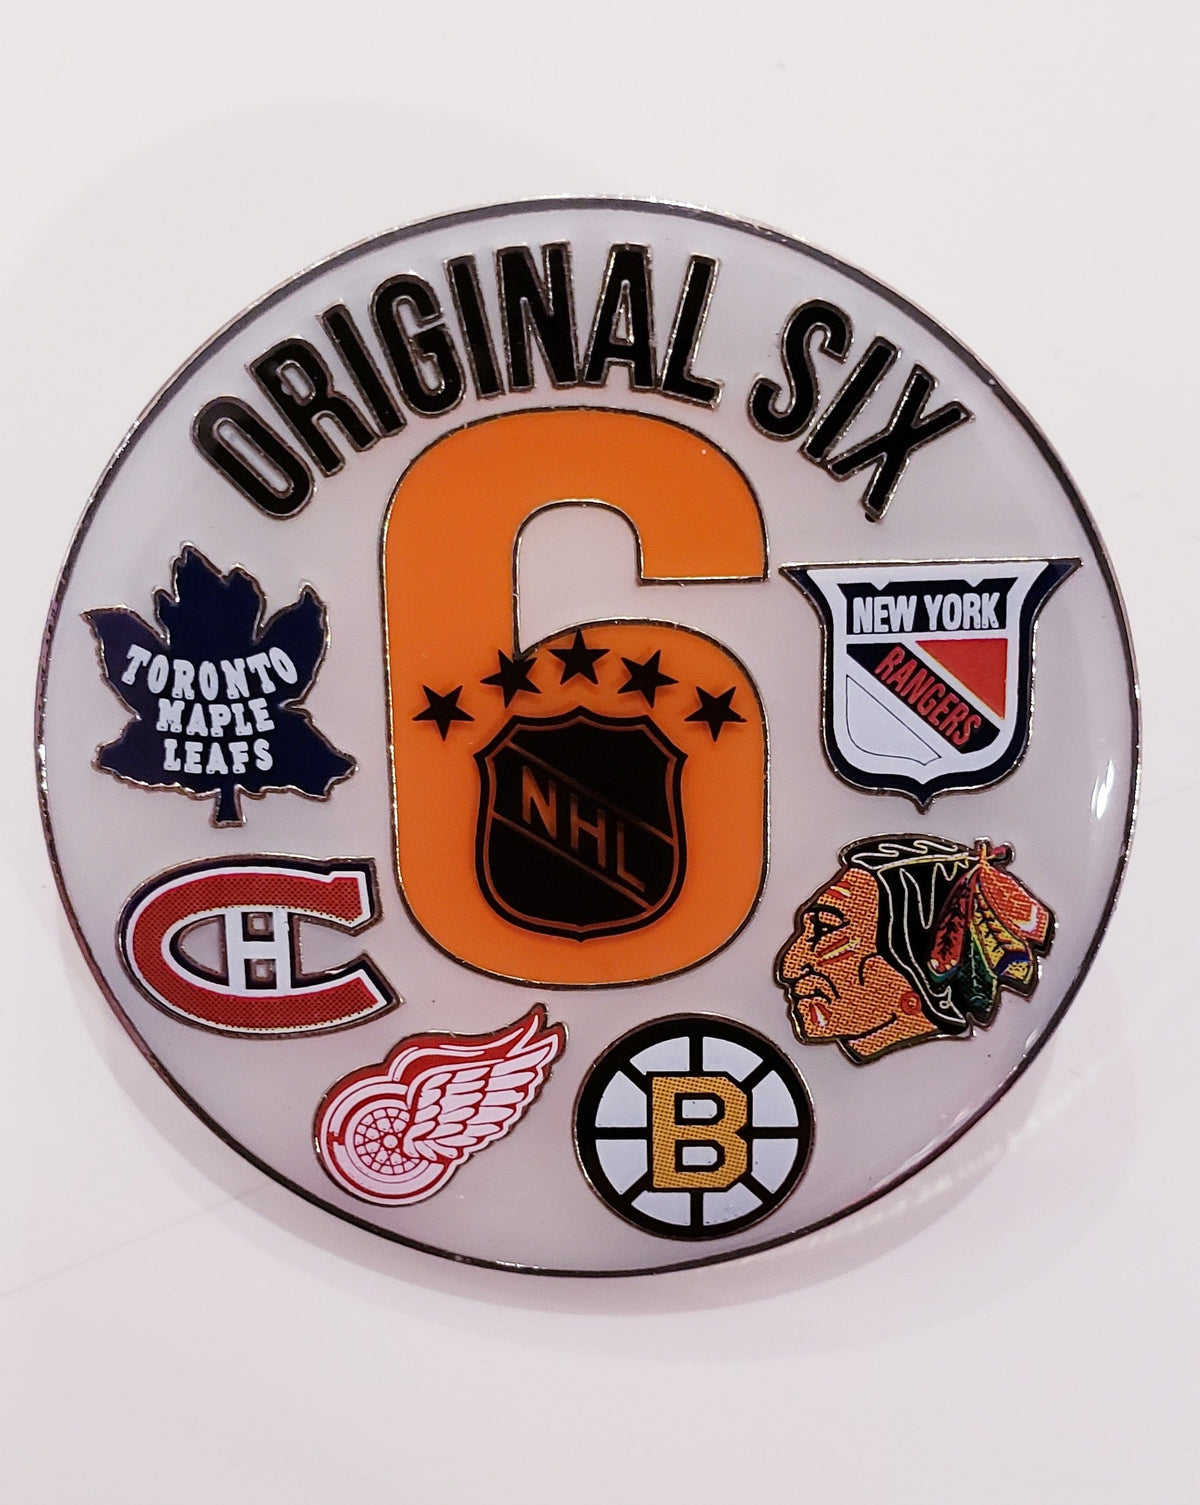 The NHL's Original Six